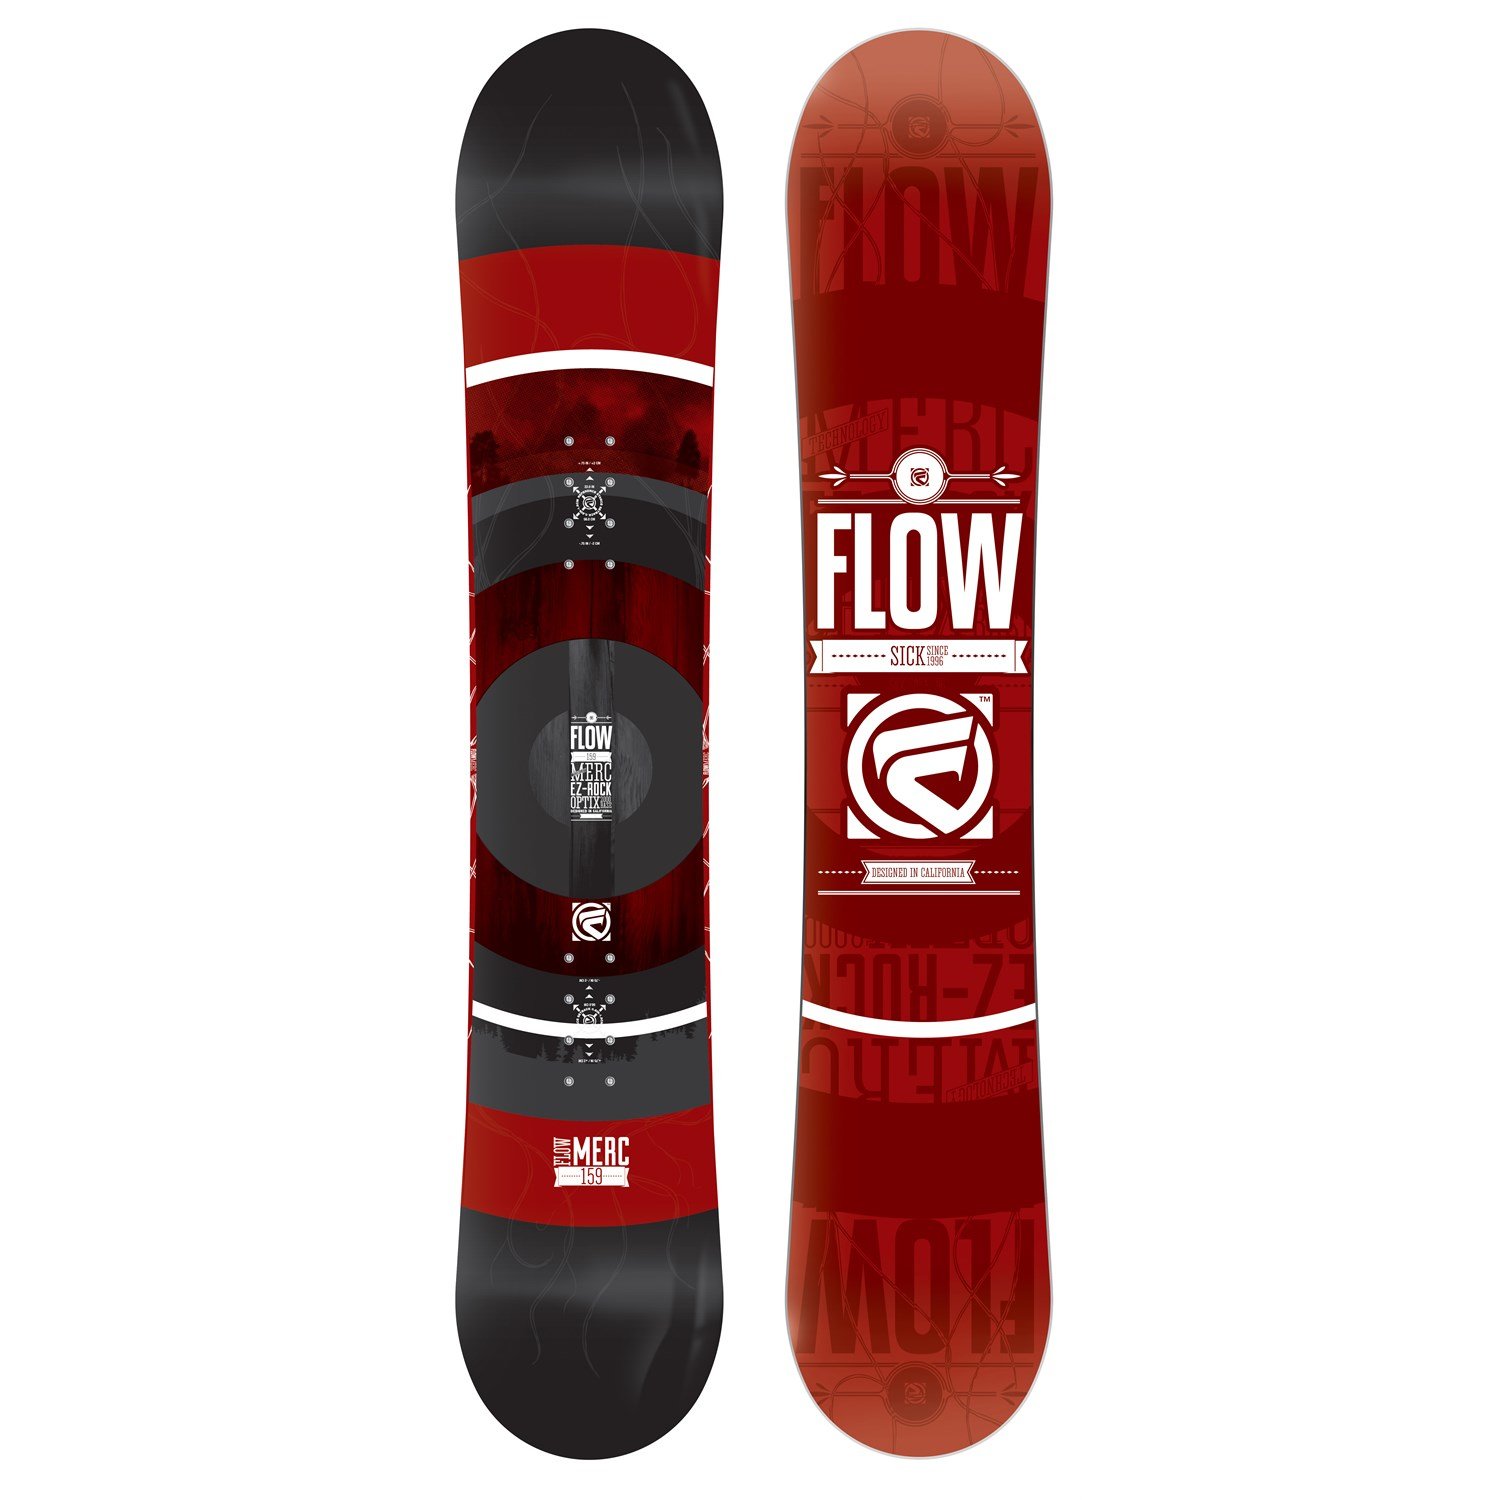 Huh Ster stroomkring Flow Merc Black Snowboard 2015 | evo